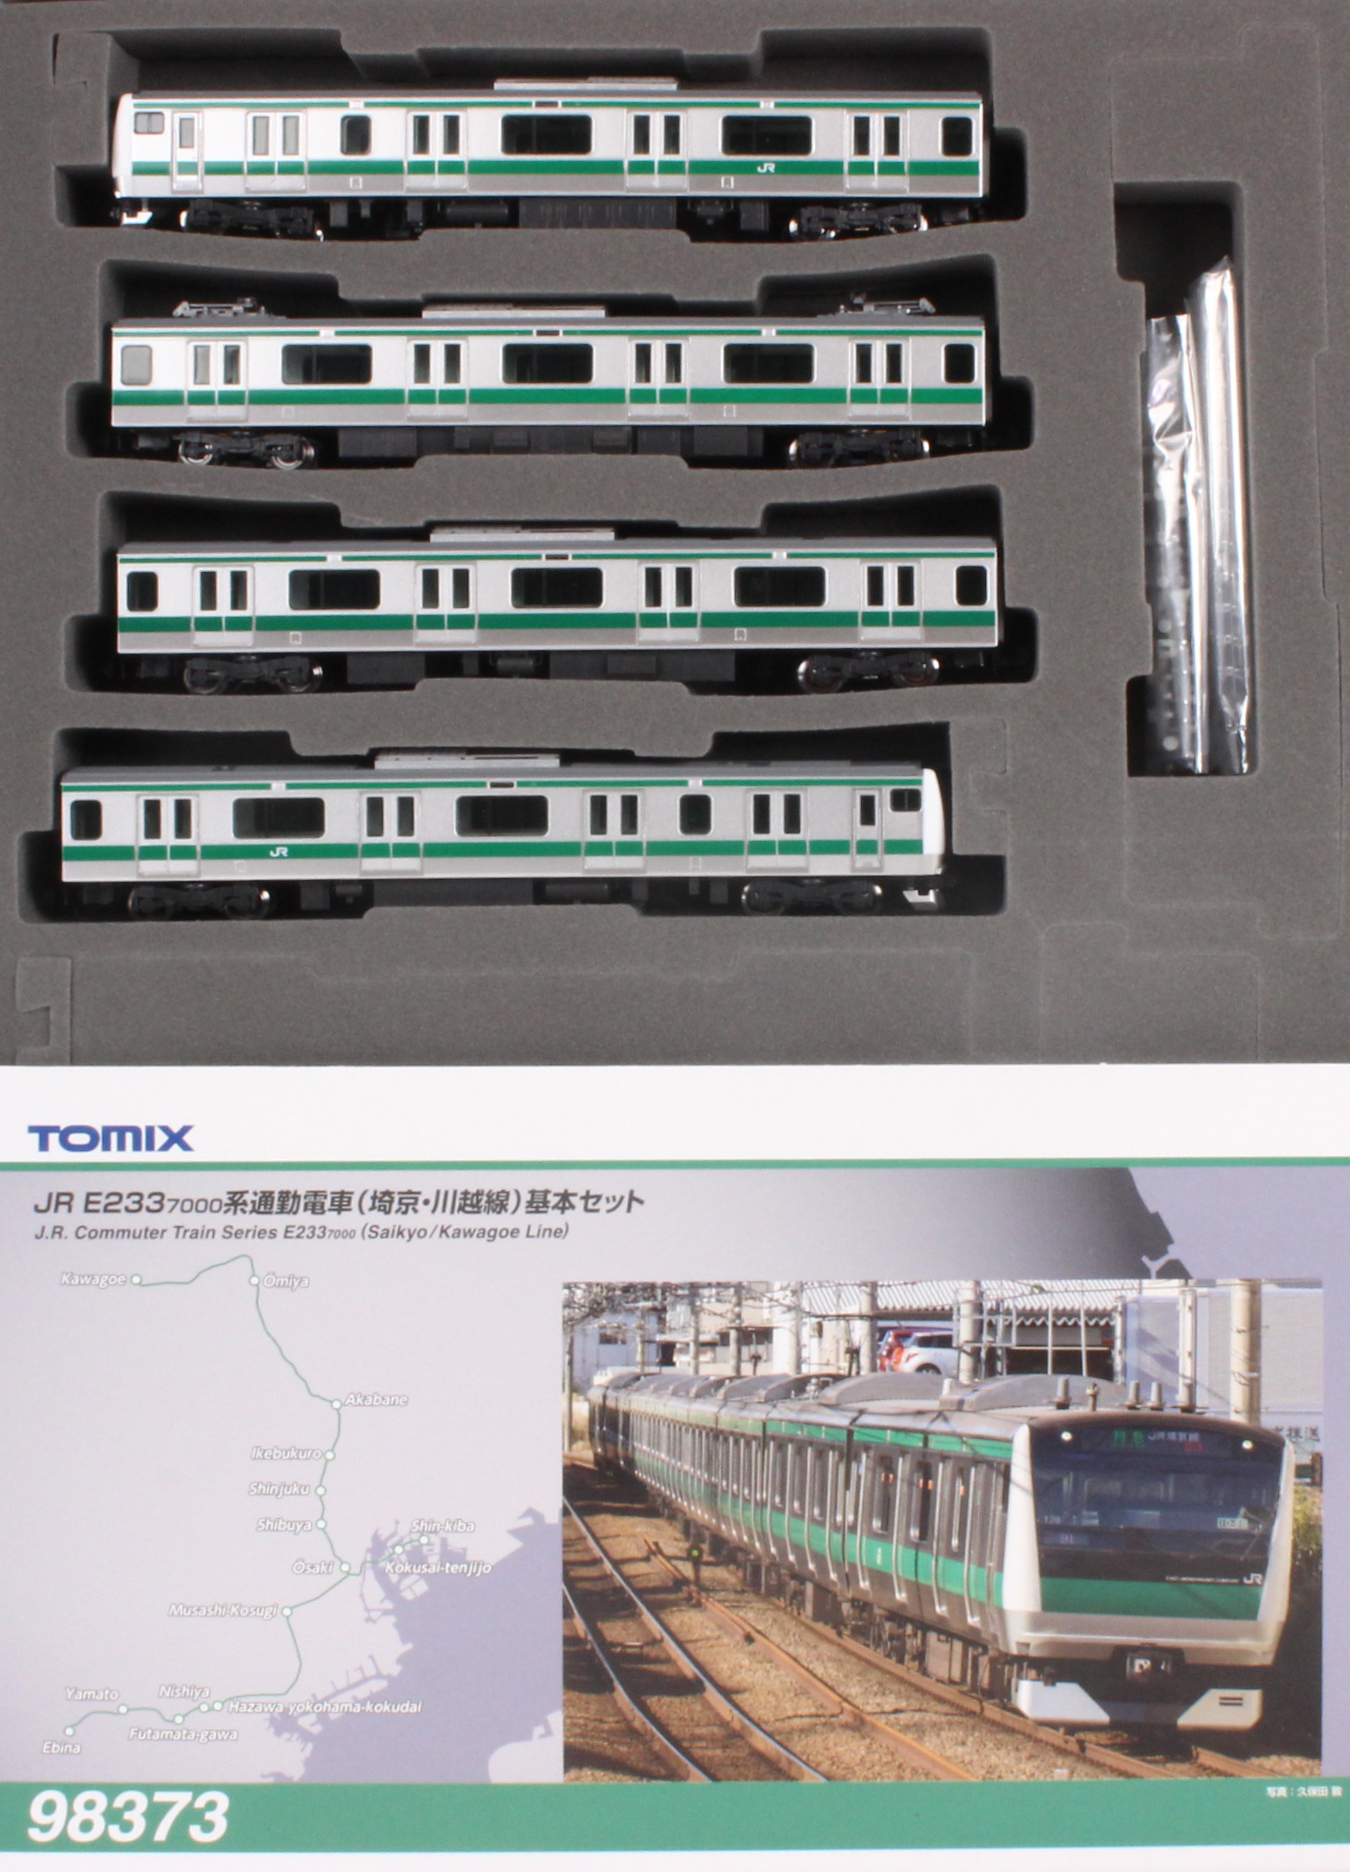 TOMIX Nゲージ E233-7000系通勤電車 埼京・川越線 基本セット 4両